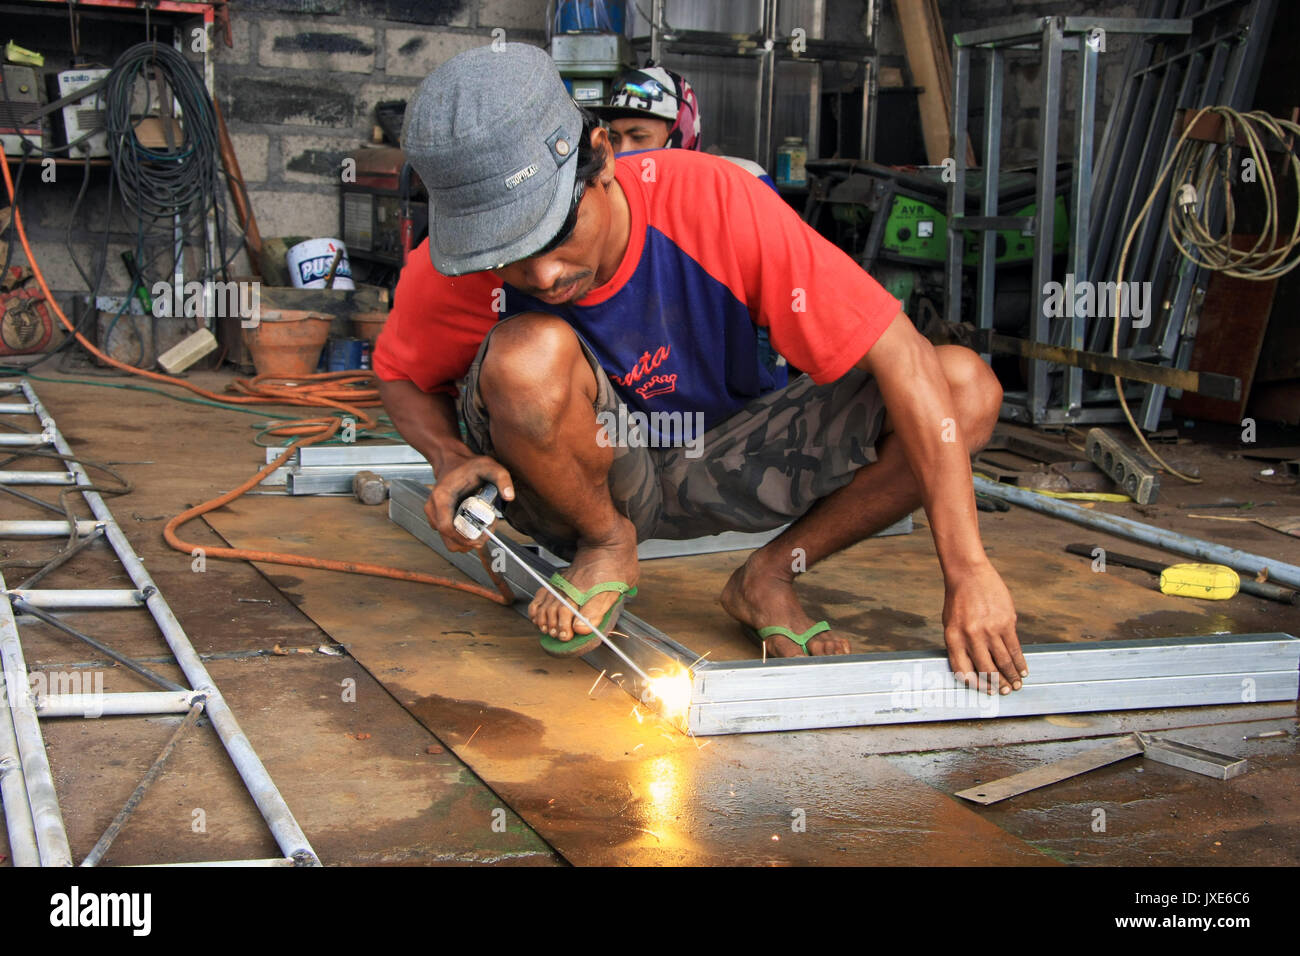 Kuta/Bali - September 13, 2016: Male welder/fabricator welding metalwork in workshop Stock Photo